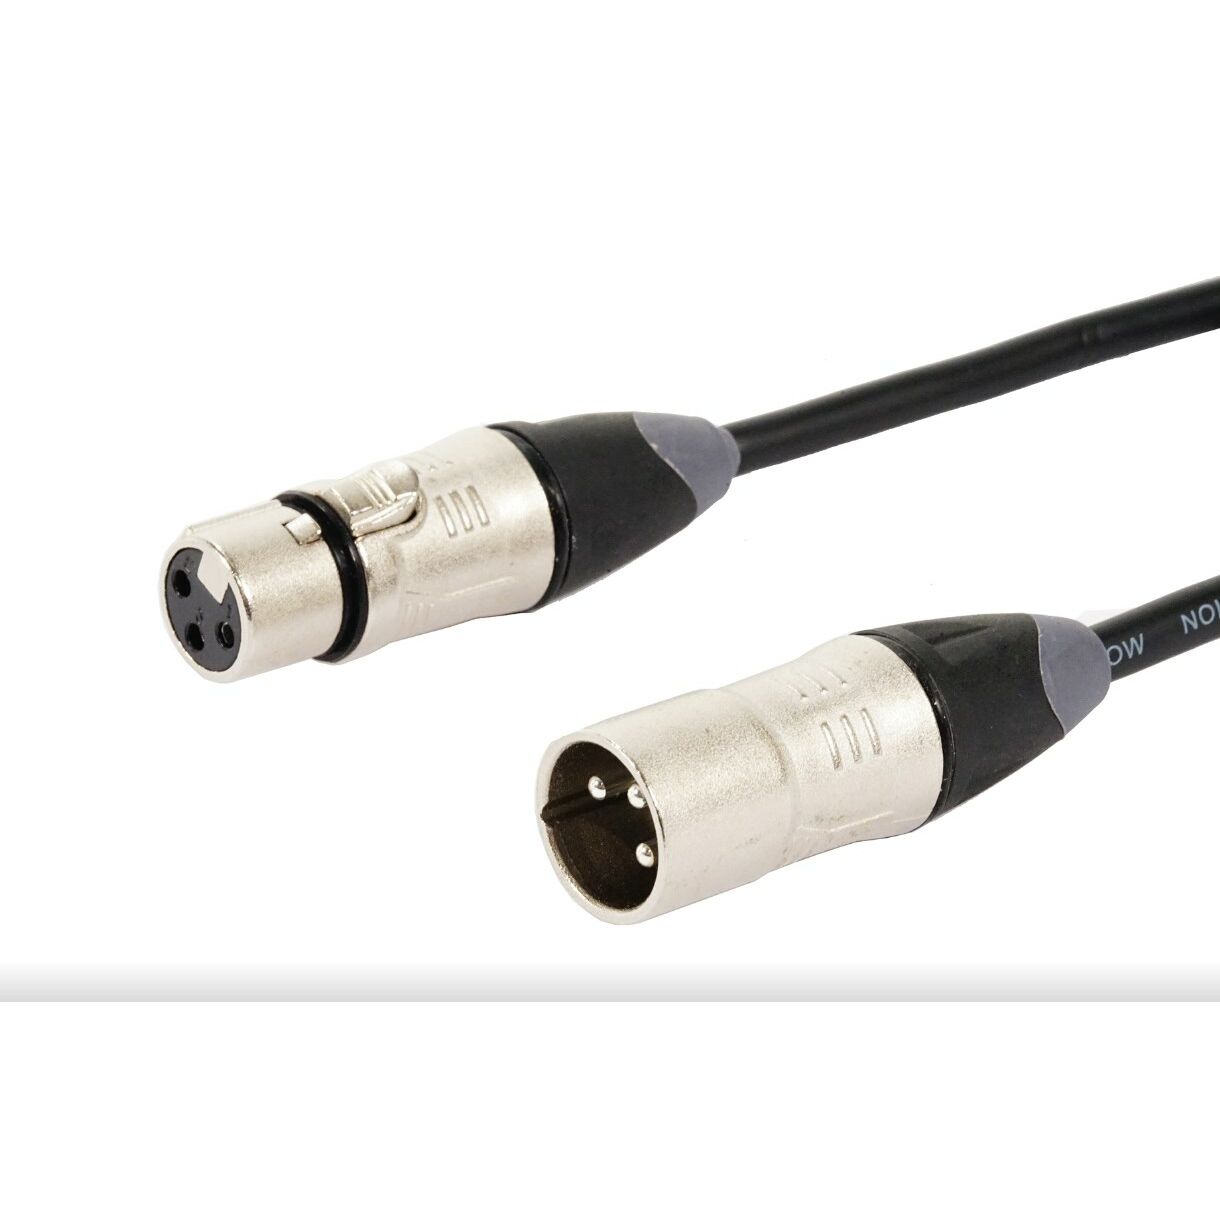 Cable XLR Male to XLR Female 3m - Electronio